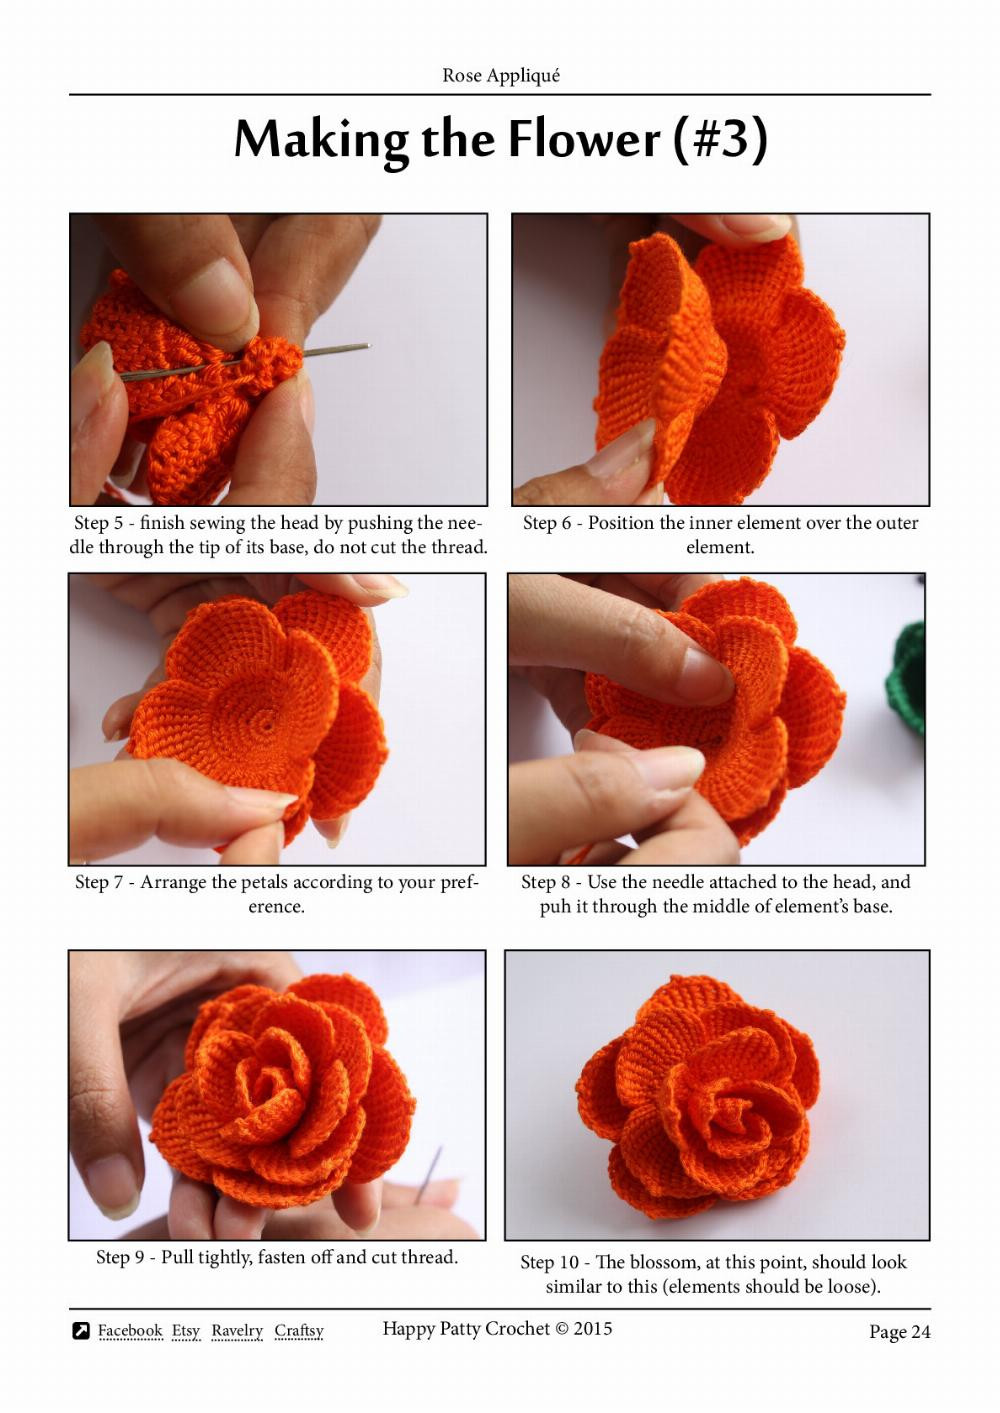 Rose Appliqué crochet pattern